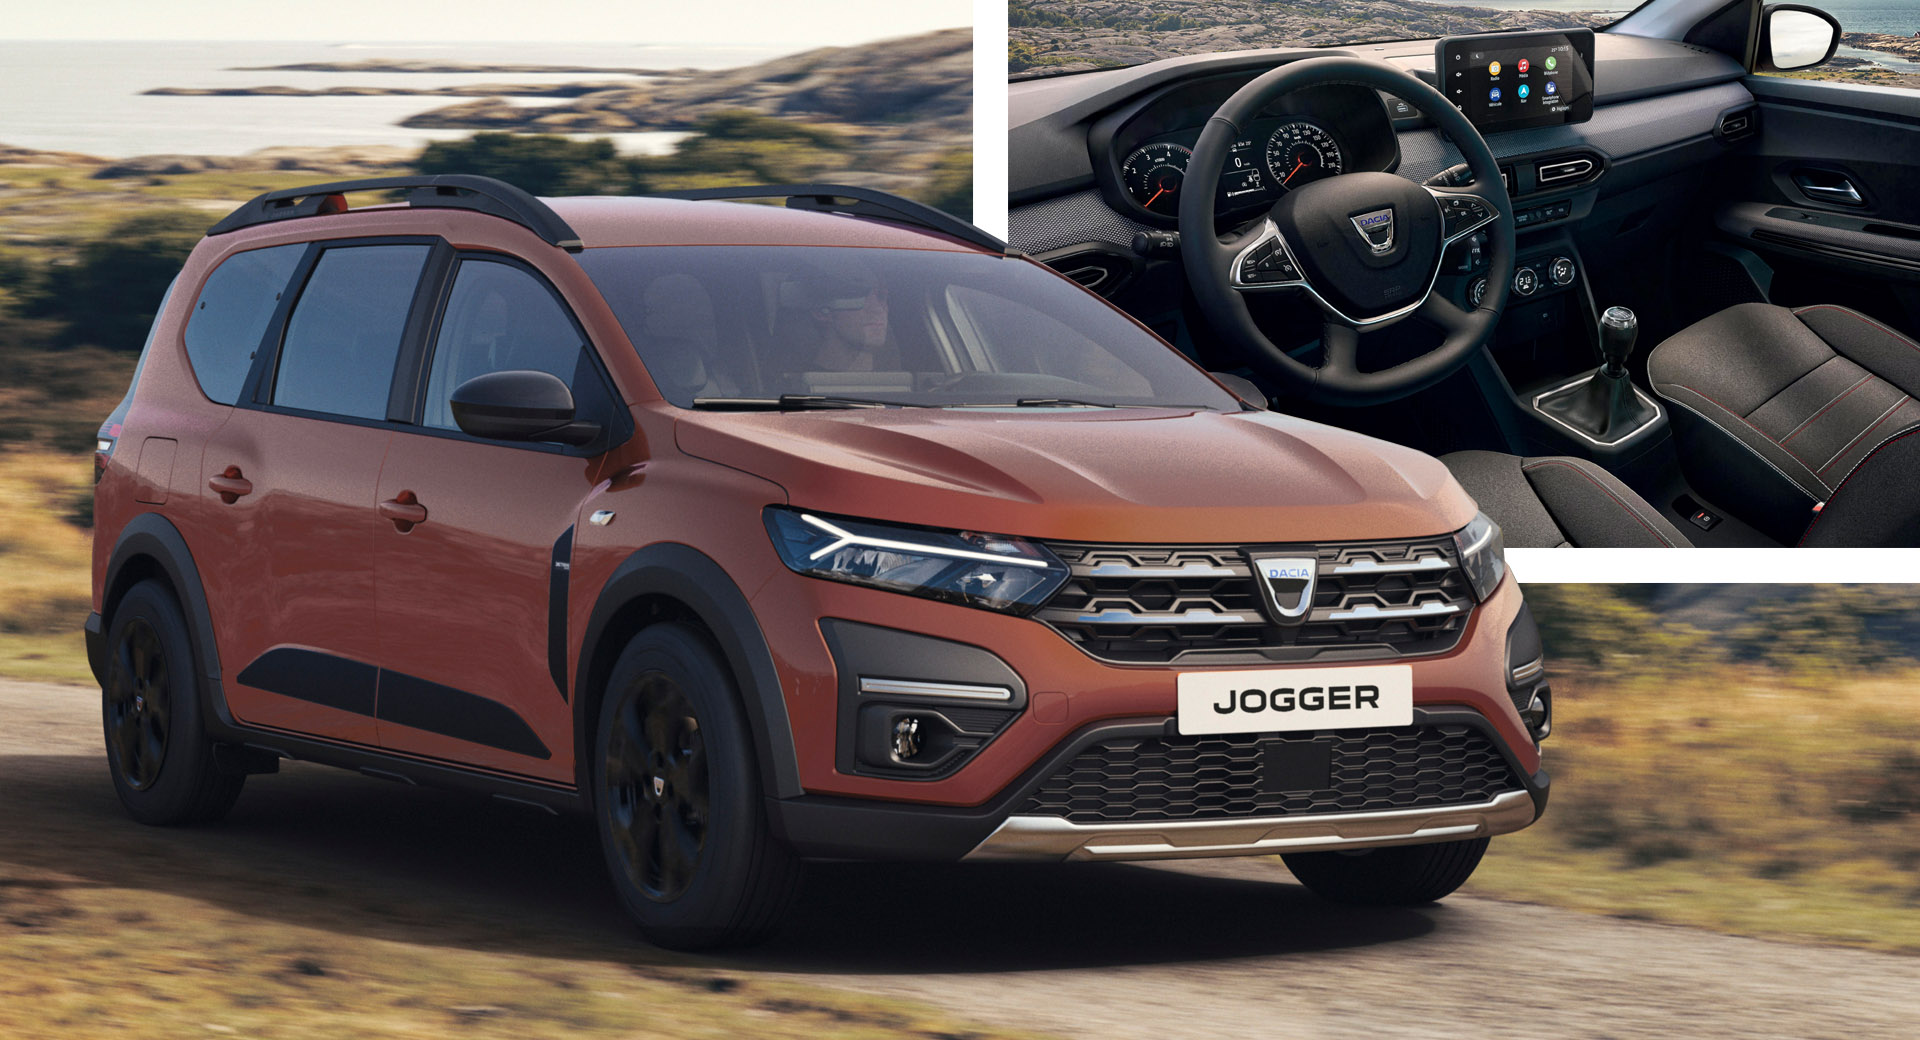 Jogger - The 7-seater family car - Dacia